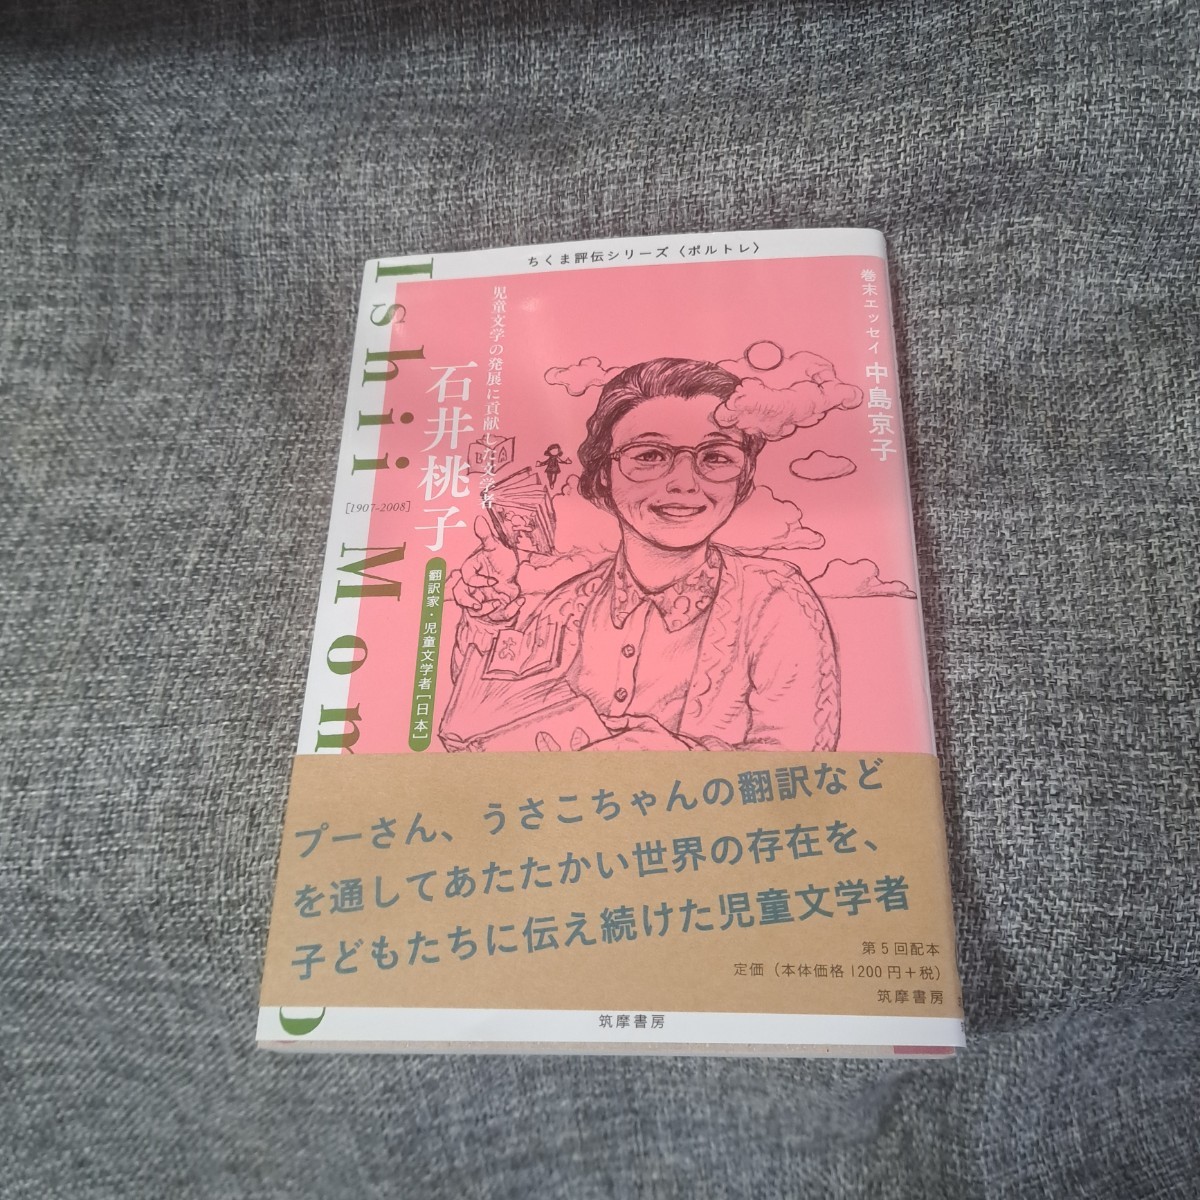  Ishii Momoko : juvenile literature. departure exhibition . contribution did literature person : translation house * juvenile literature person ( Japan )